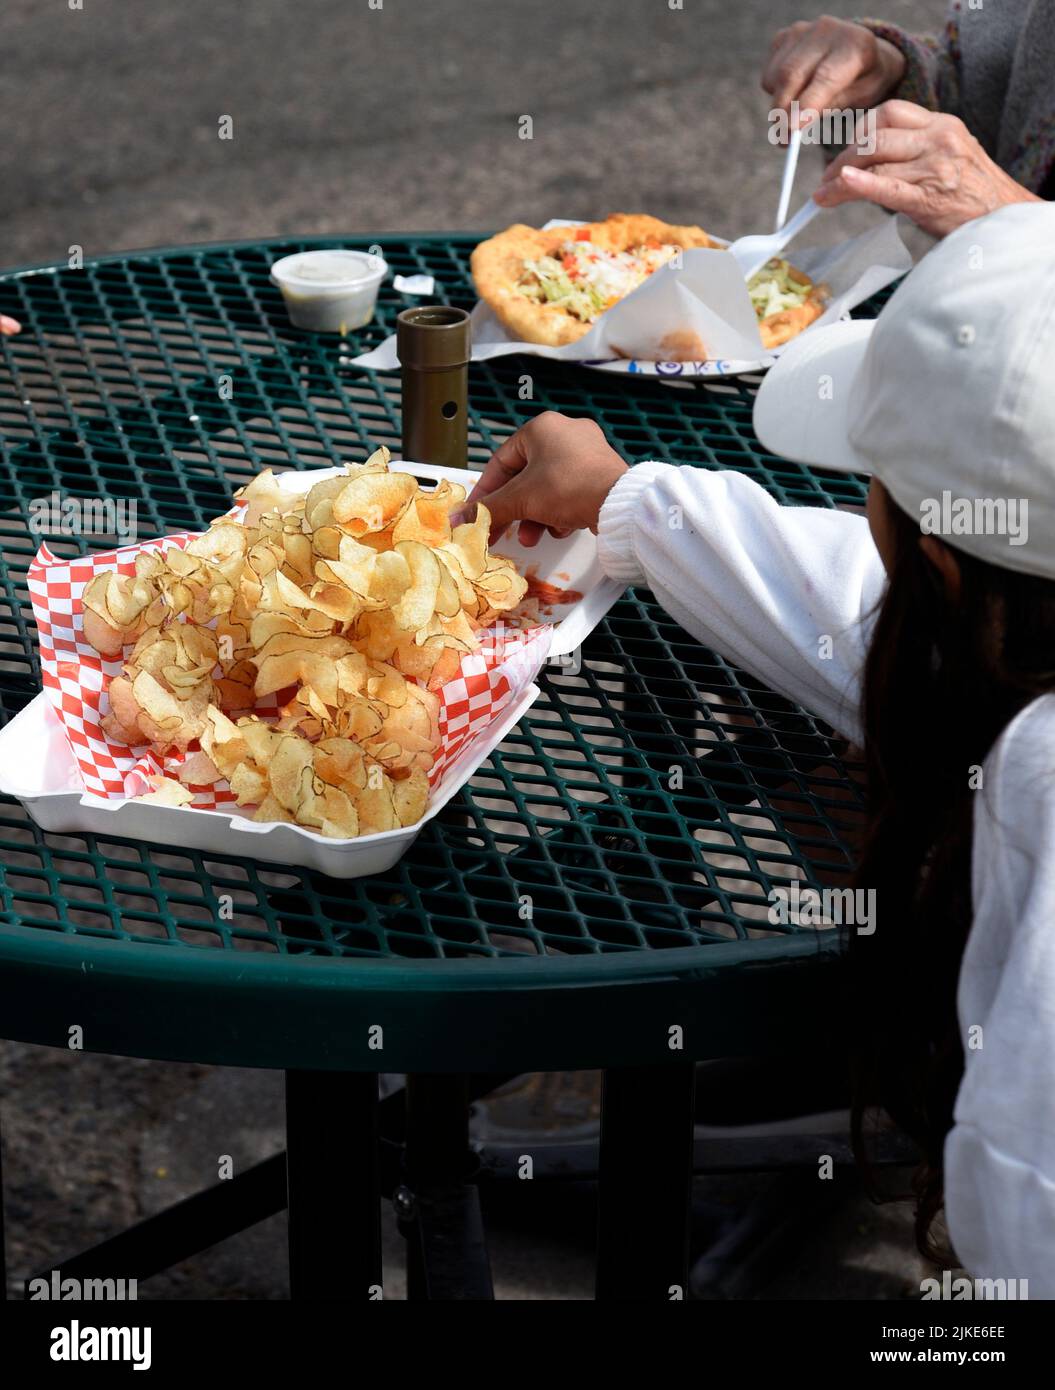 A family enjoys eating ribbon fries at an outdoor festival in Santa Fe, New Mexico. Stock Photo